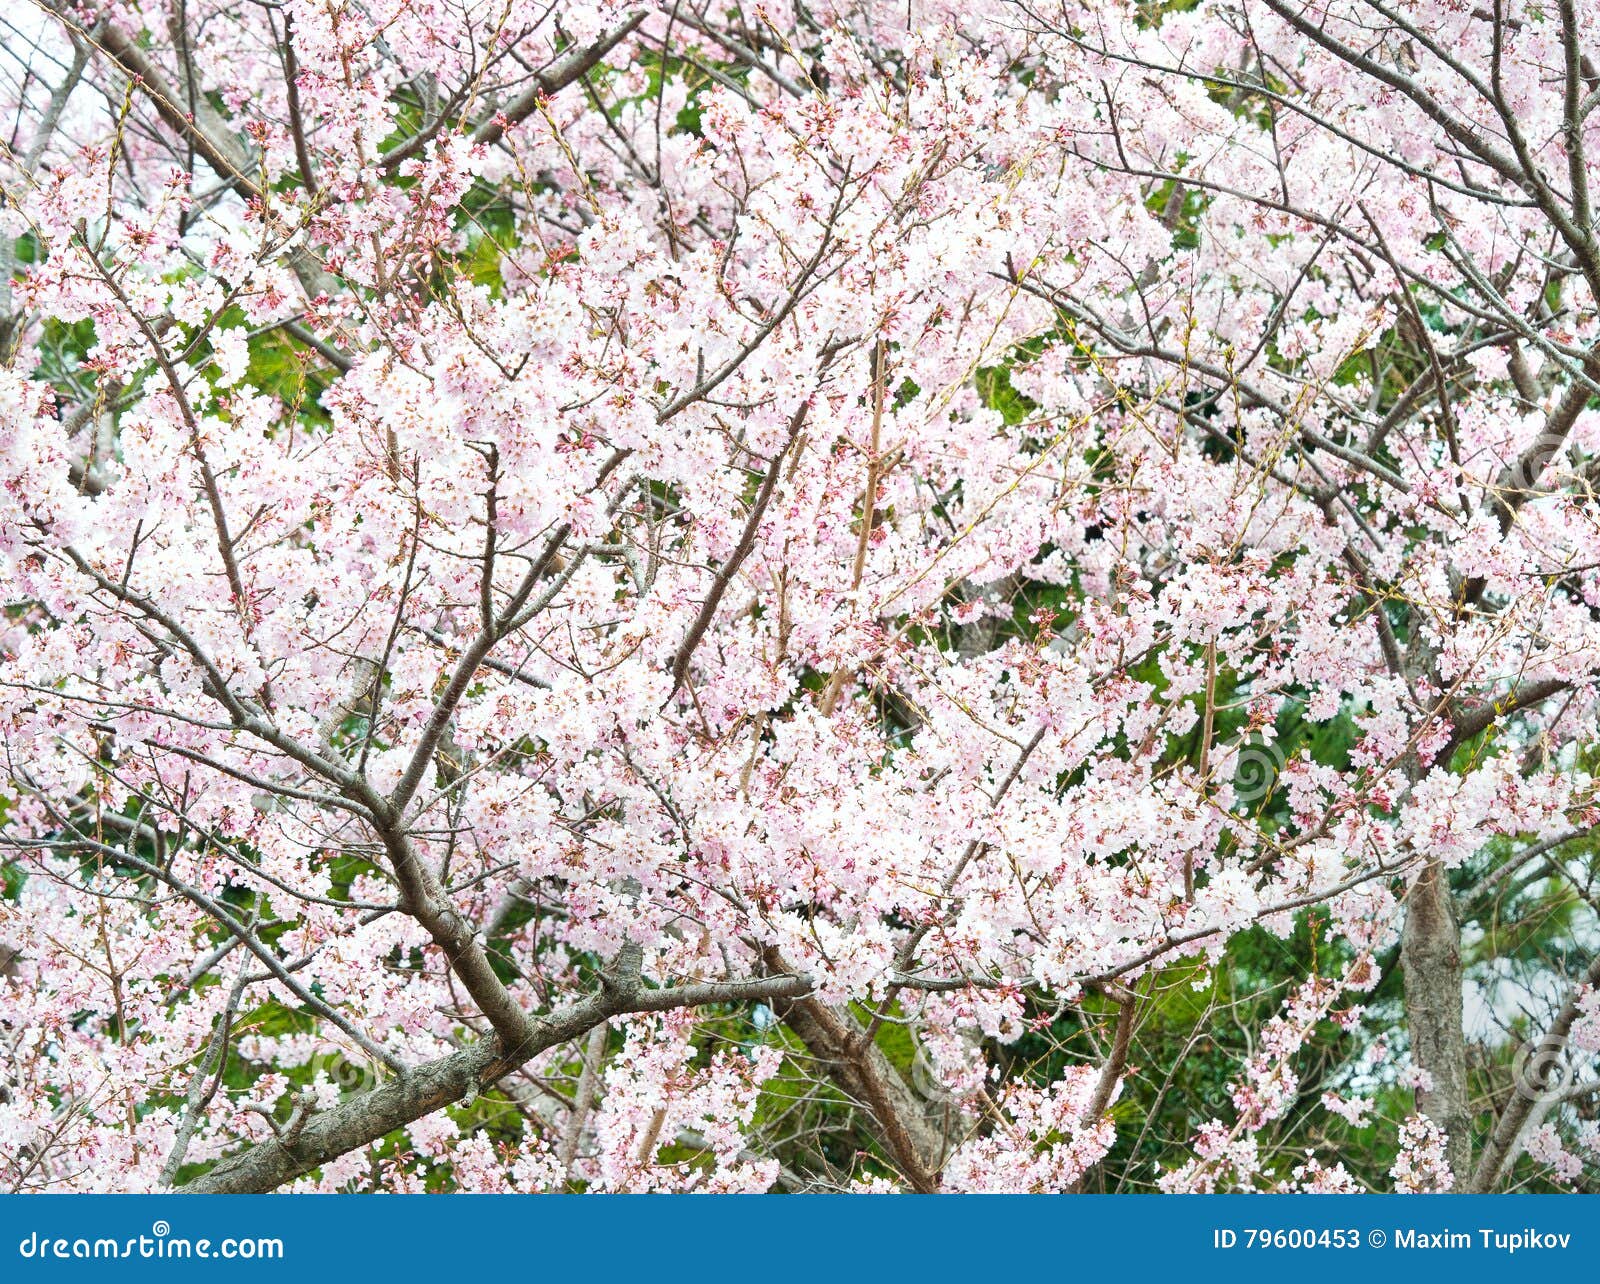 sakura flowers garden at jeju island stock image - image of